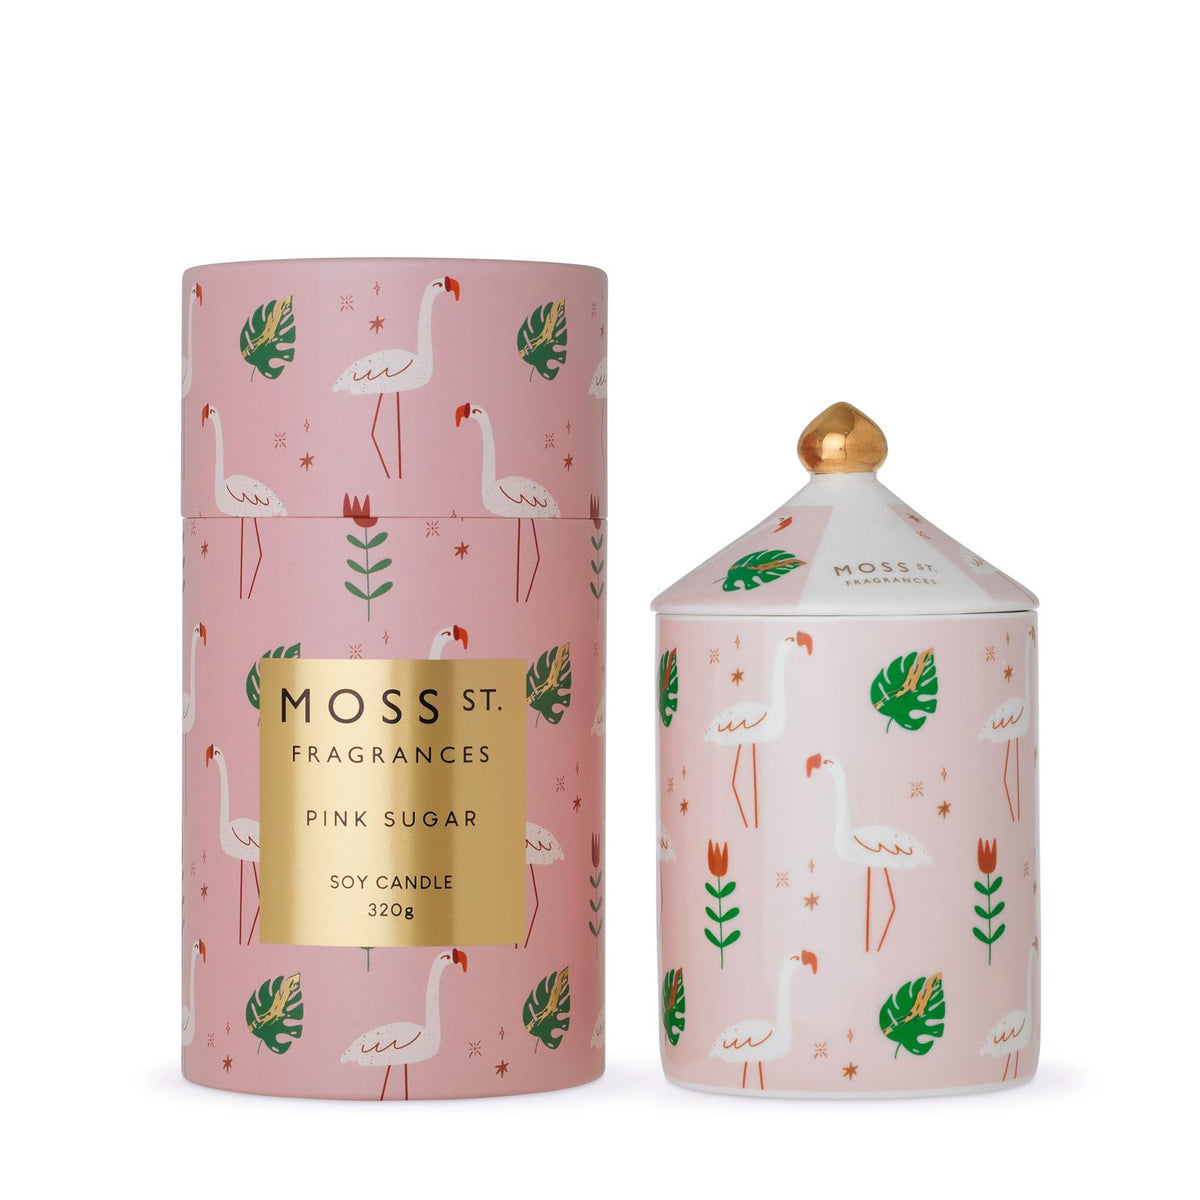 Moss St. Fragrances Pink Sugar Ceramic Soy Candle 320g